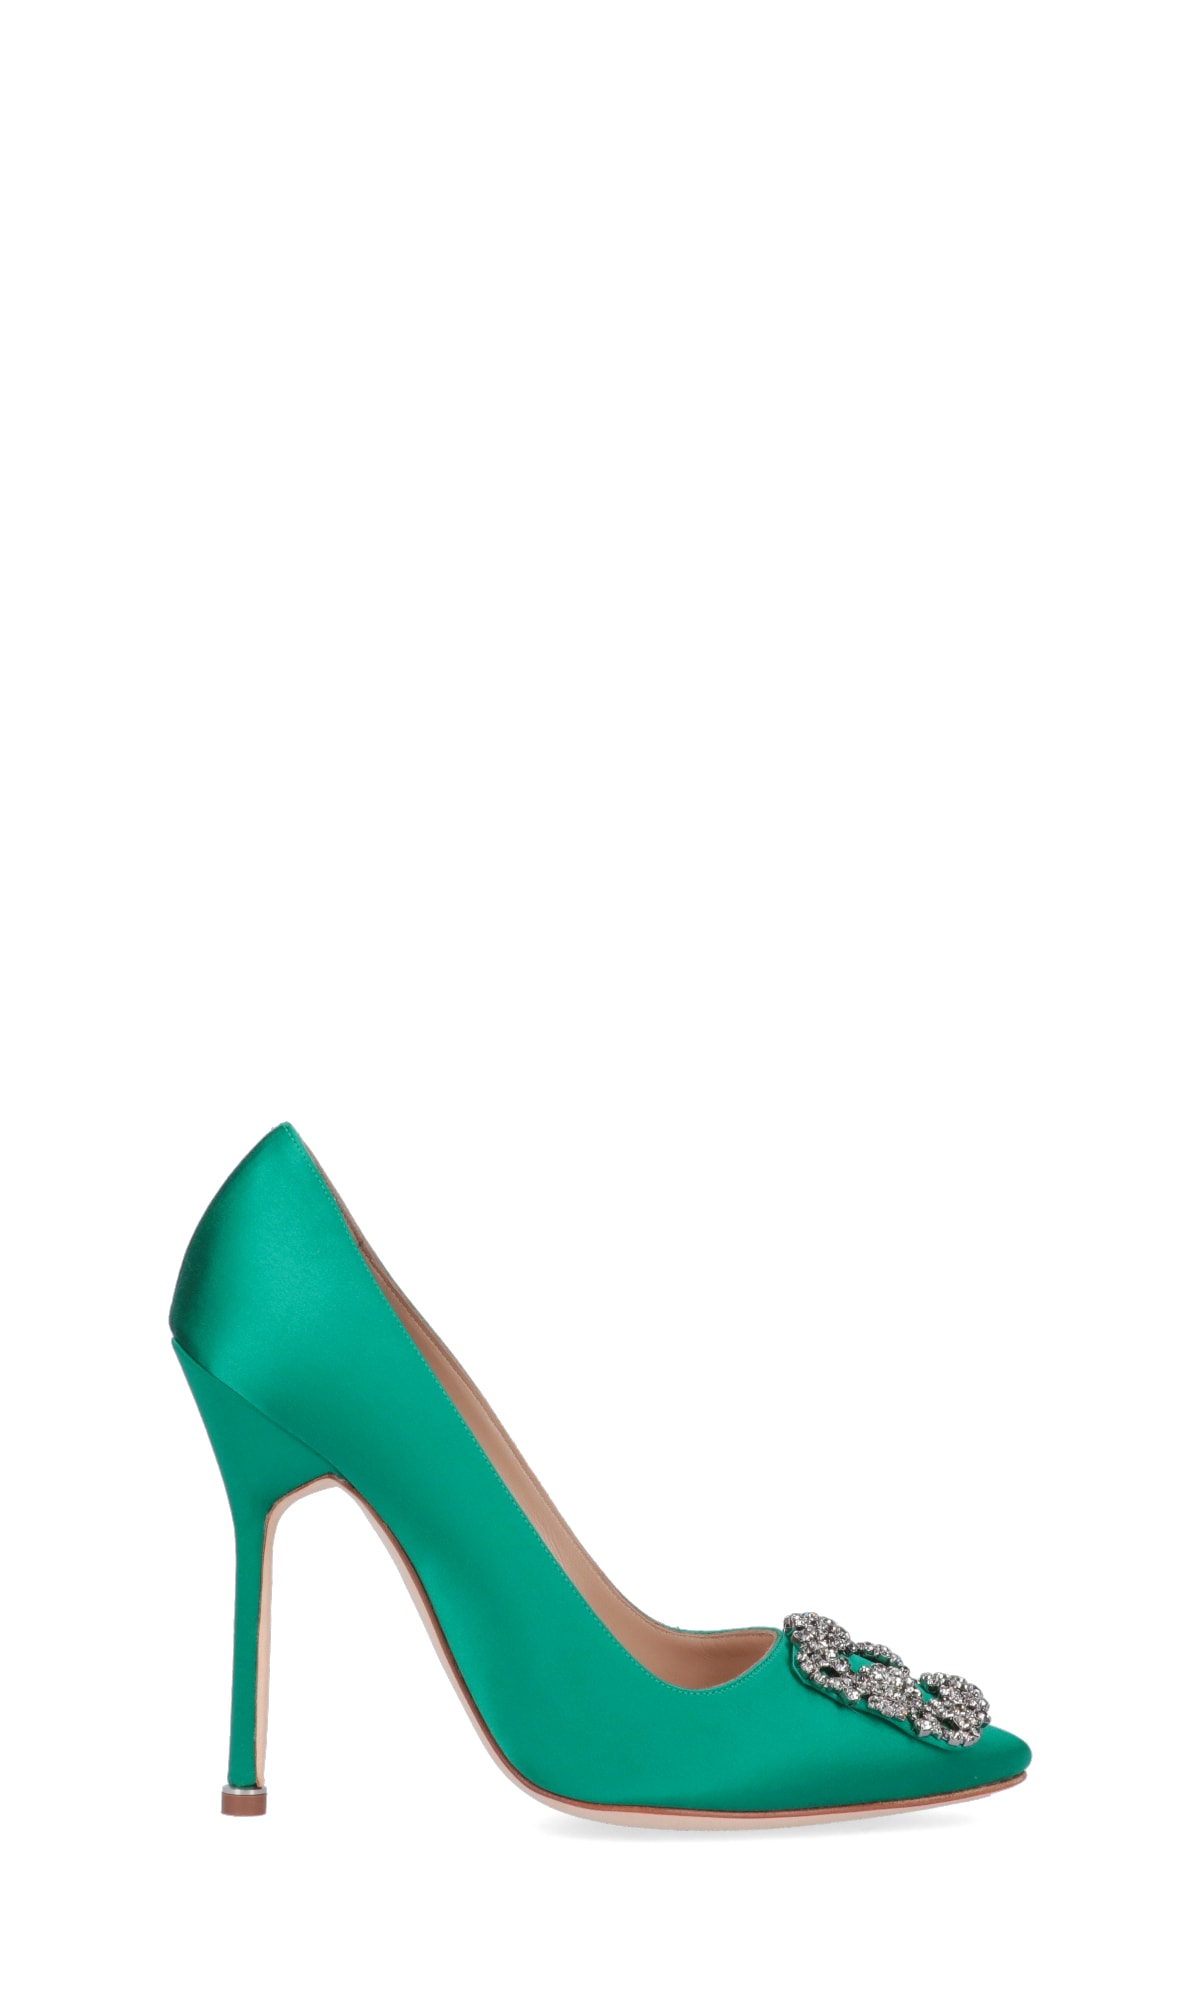 Manolo Blahnik High-heeled shoe